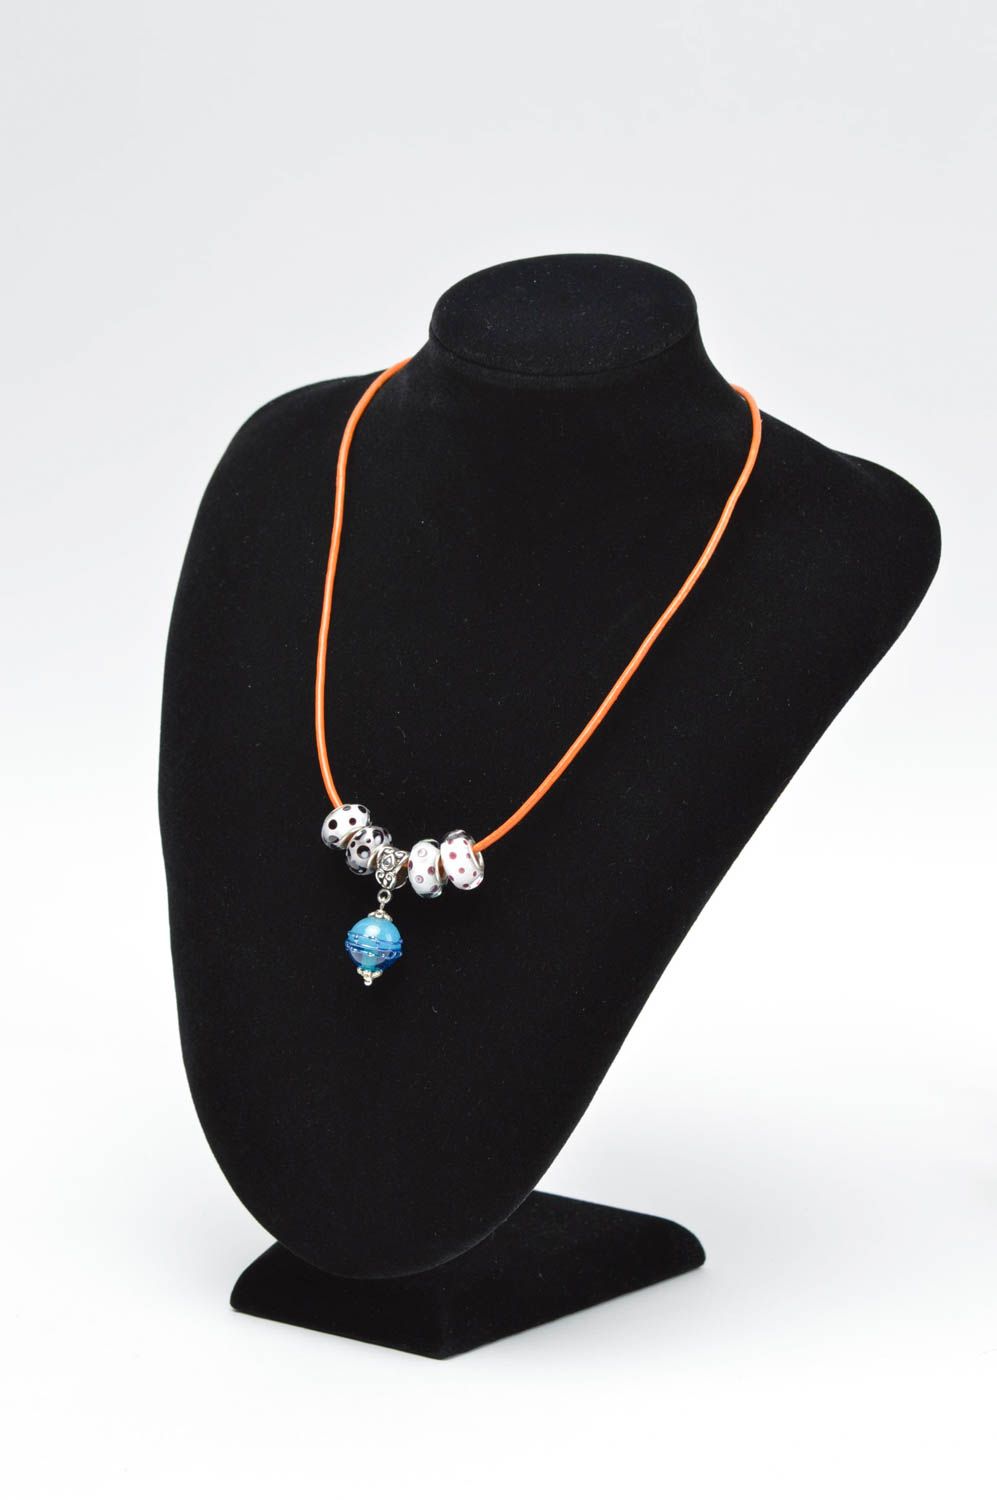 Handmade glass beaded necklace lampwork pendant stylish pendant glass beads photo 5